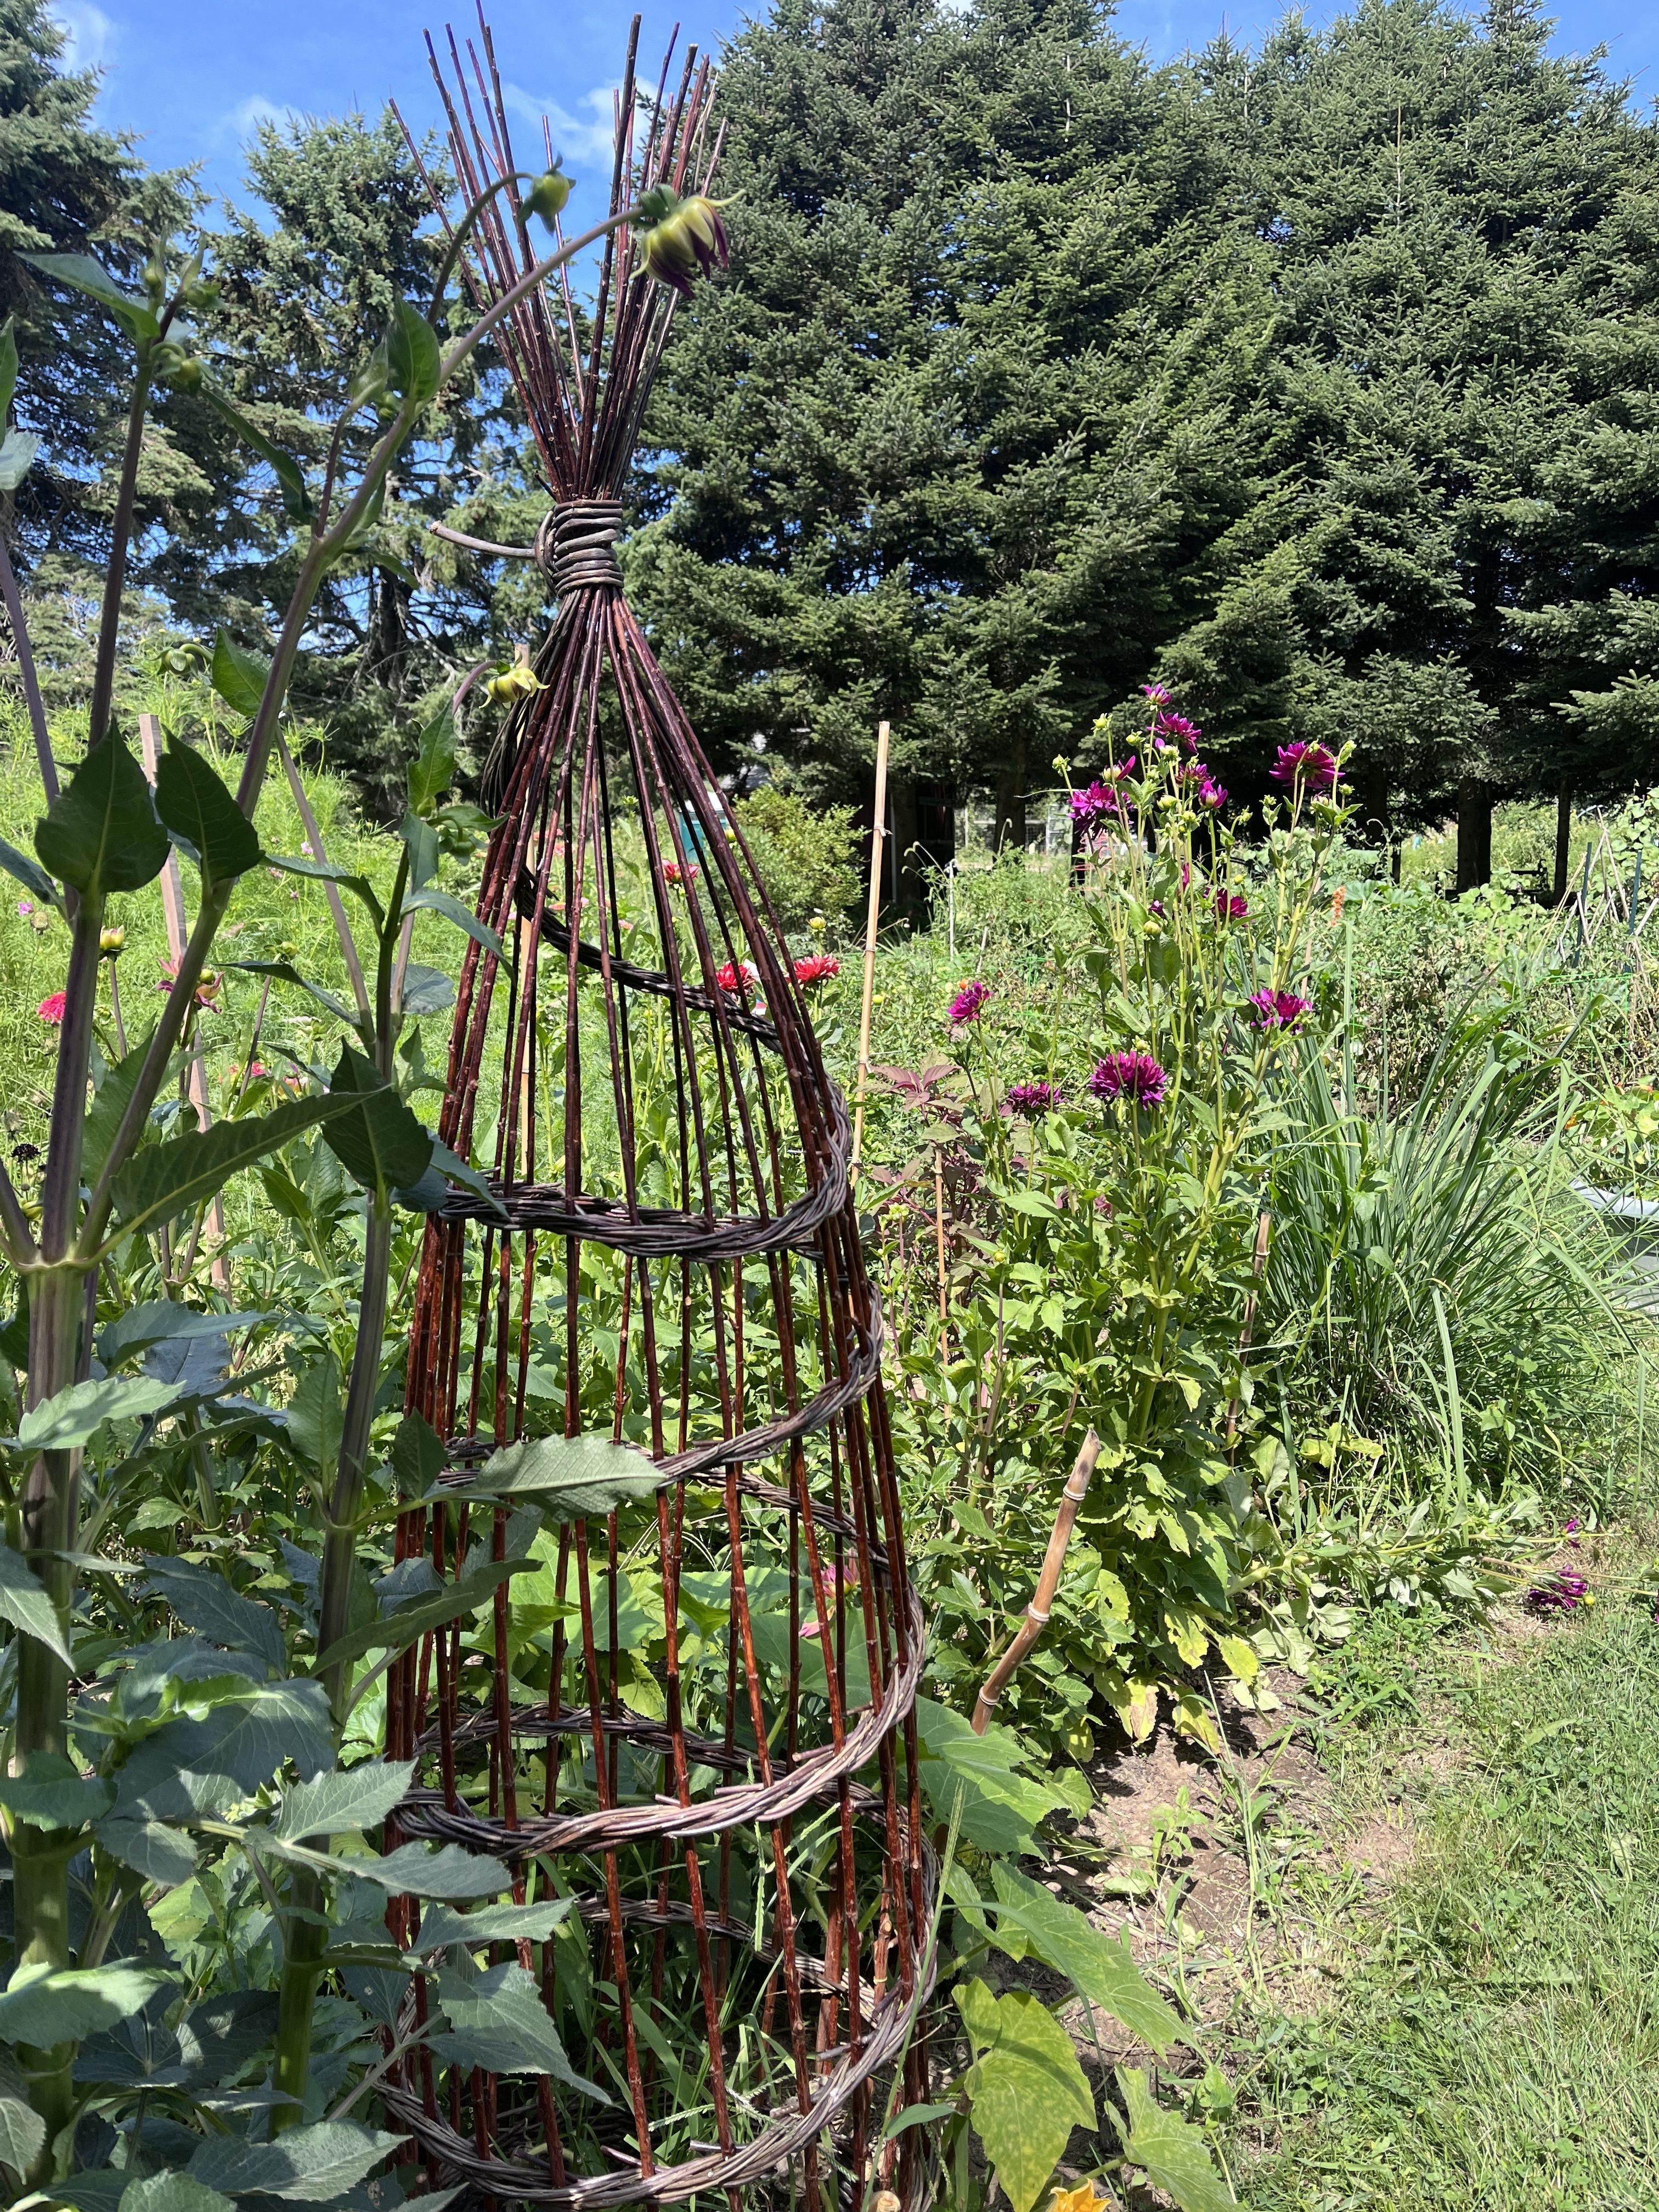 community garden plot with basket